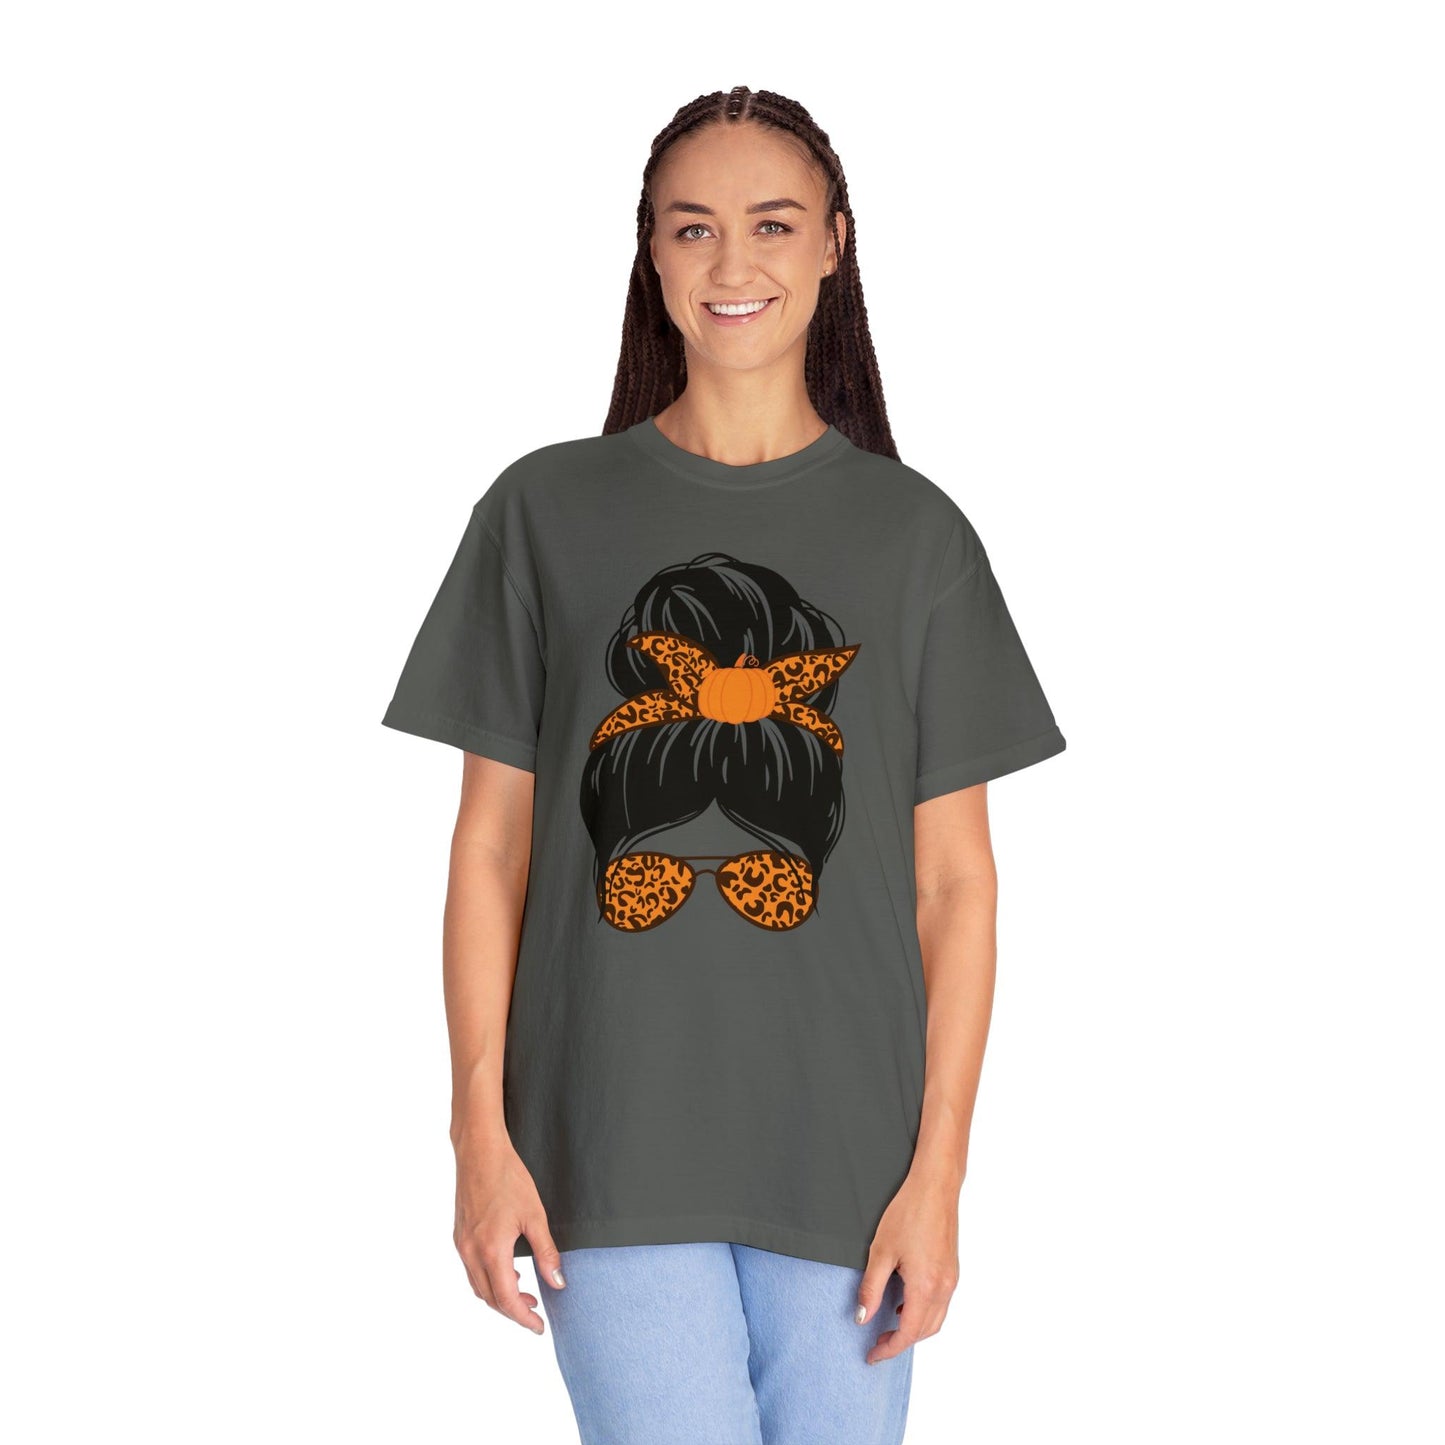 Retro Momster Shirt Halloween Tshirt, Mom Halloween Shirt Trick or Treat shirt, Vintage Shirt Halloween Shirt Office Halloween Costume Outfit